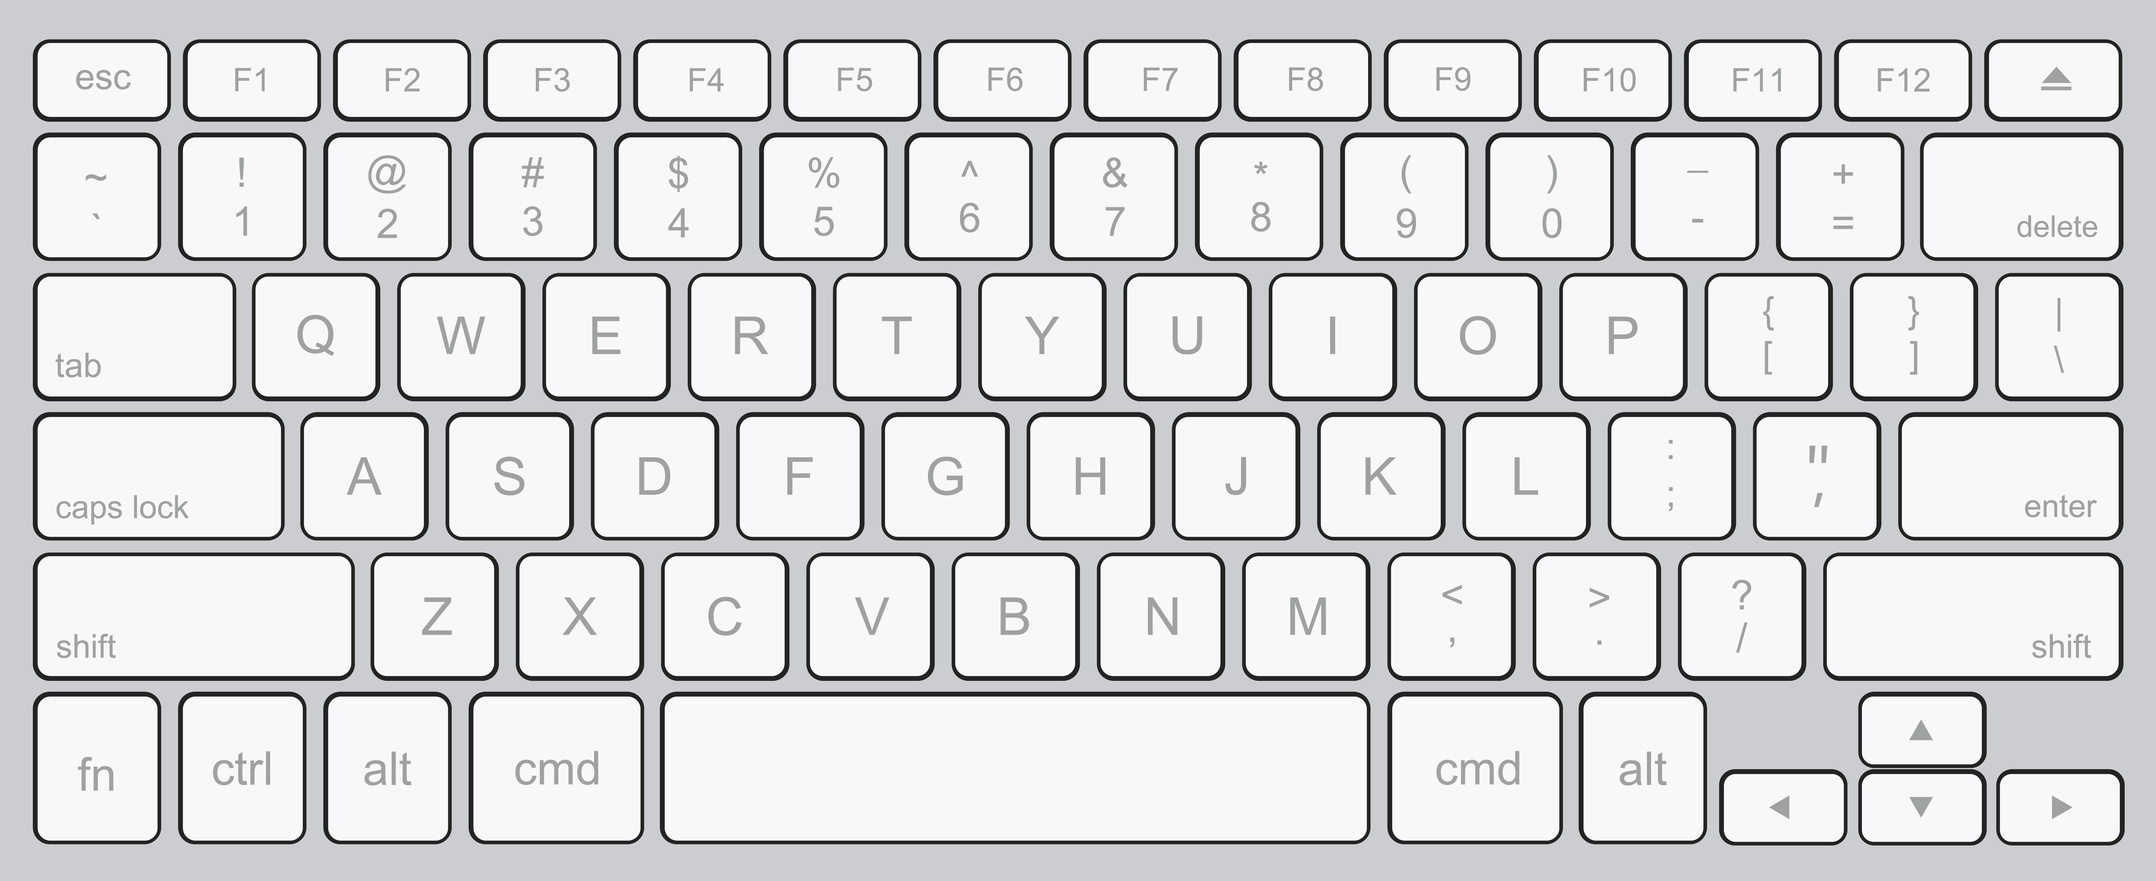 Vector modern computer keyboard background. technology design